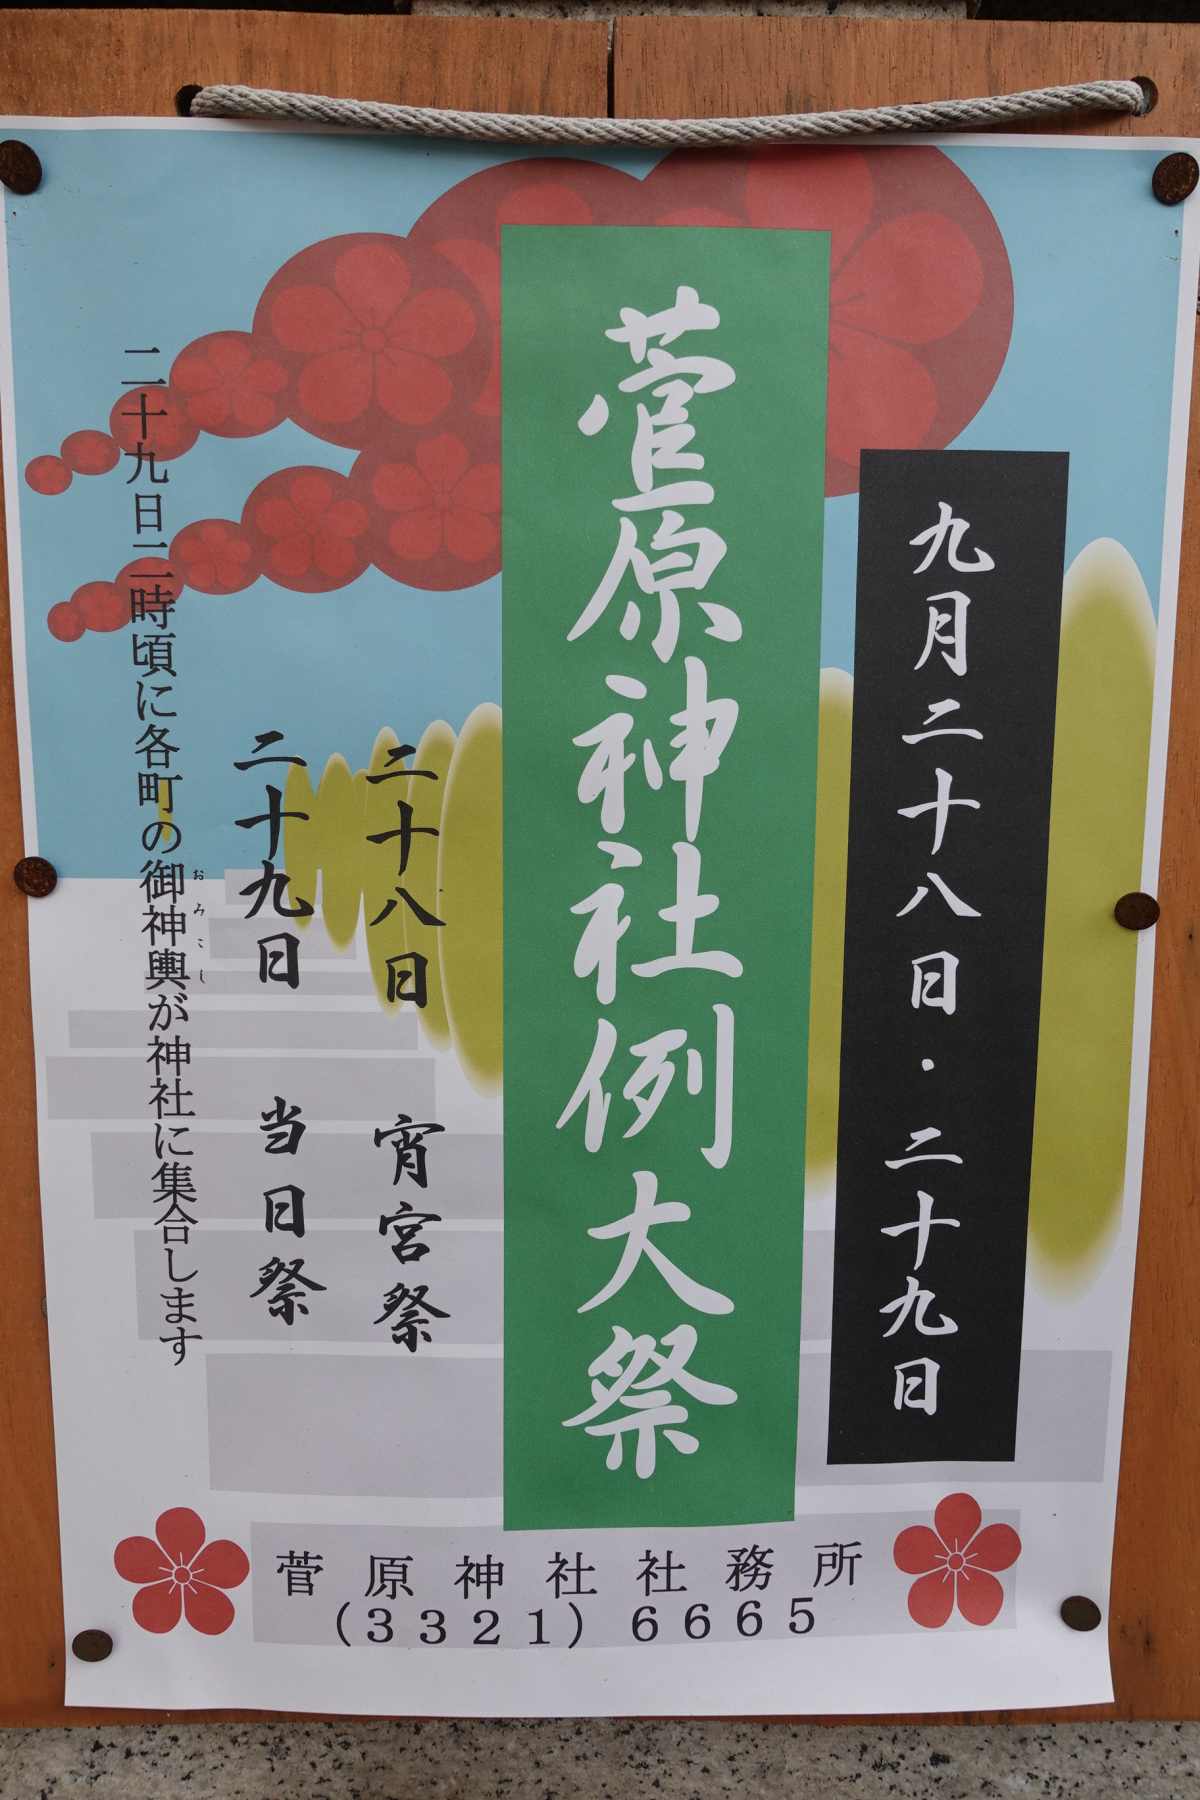 菅原神社 例大祭2019は9月28日29日開催